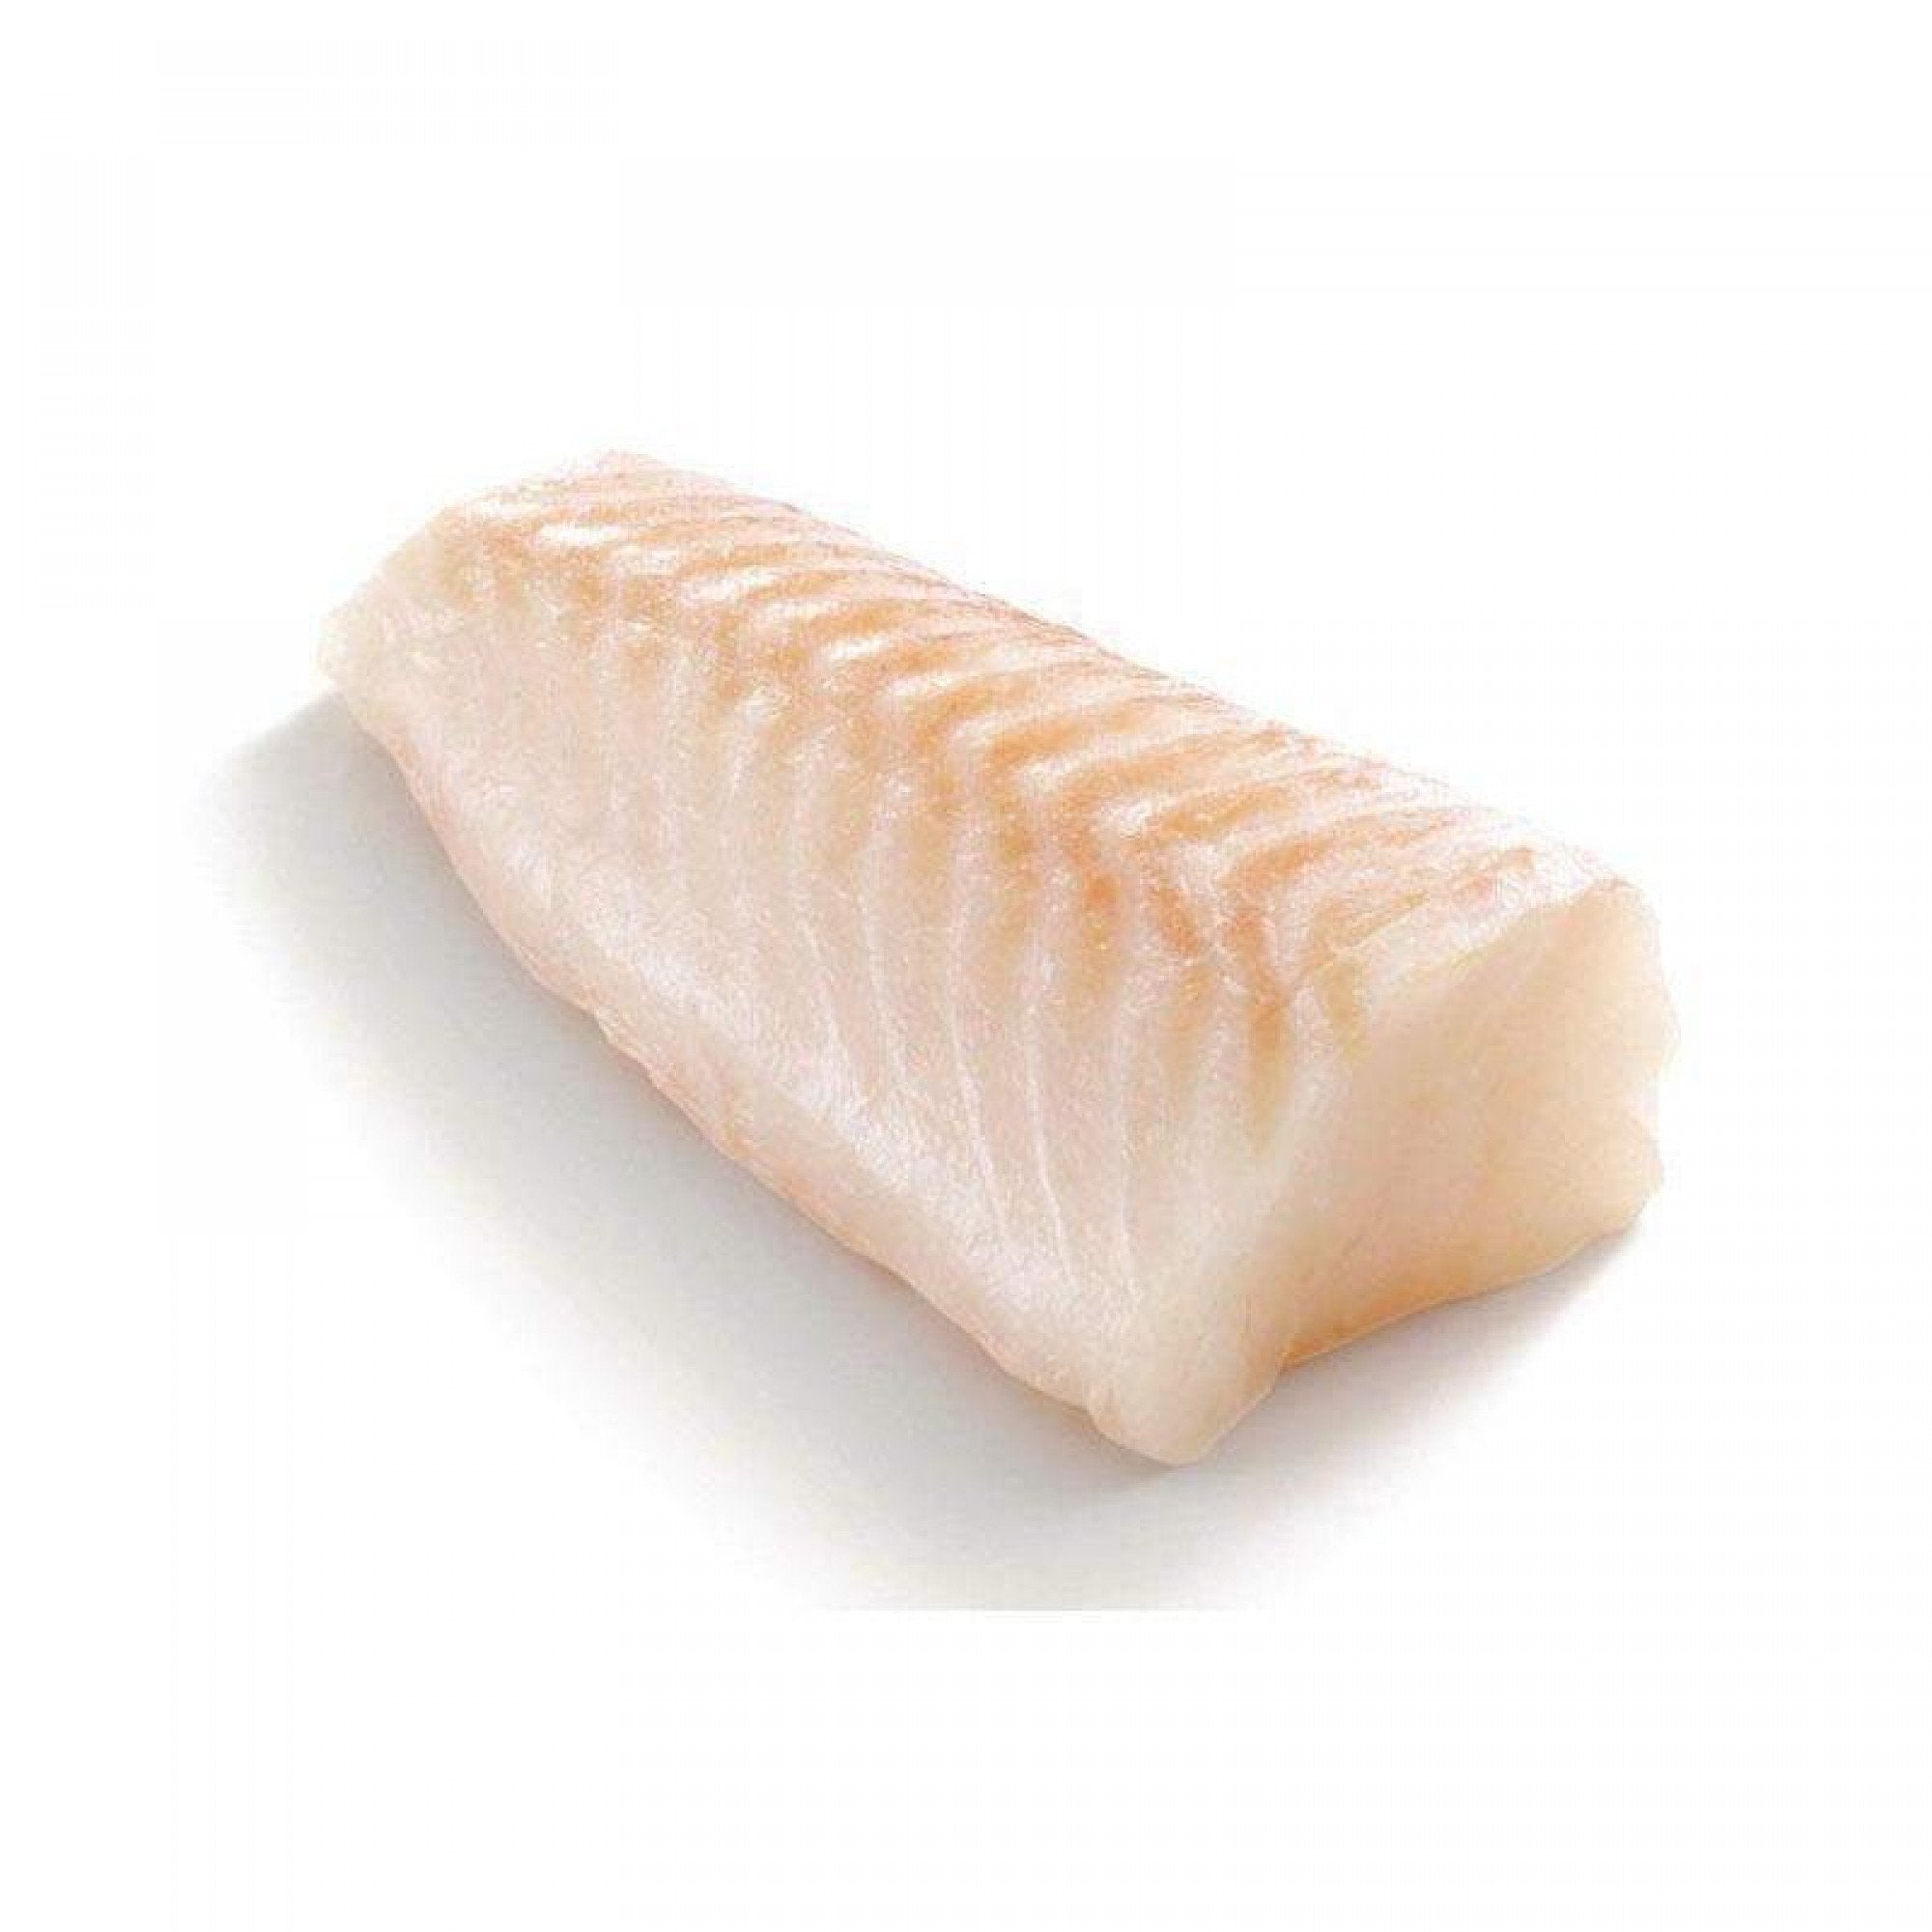 Cod Loins Skinless Boneless Small/Medium - Seafood Direct UK